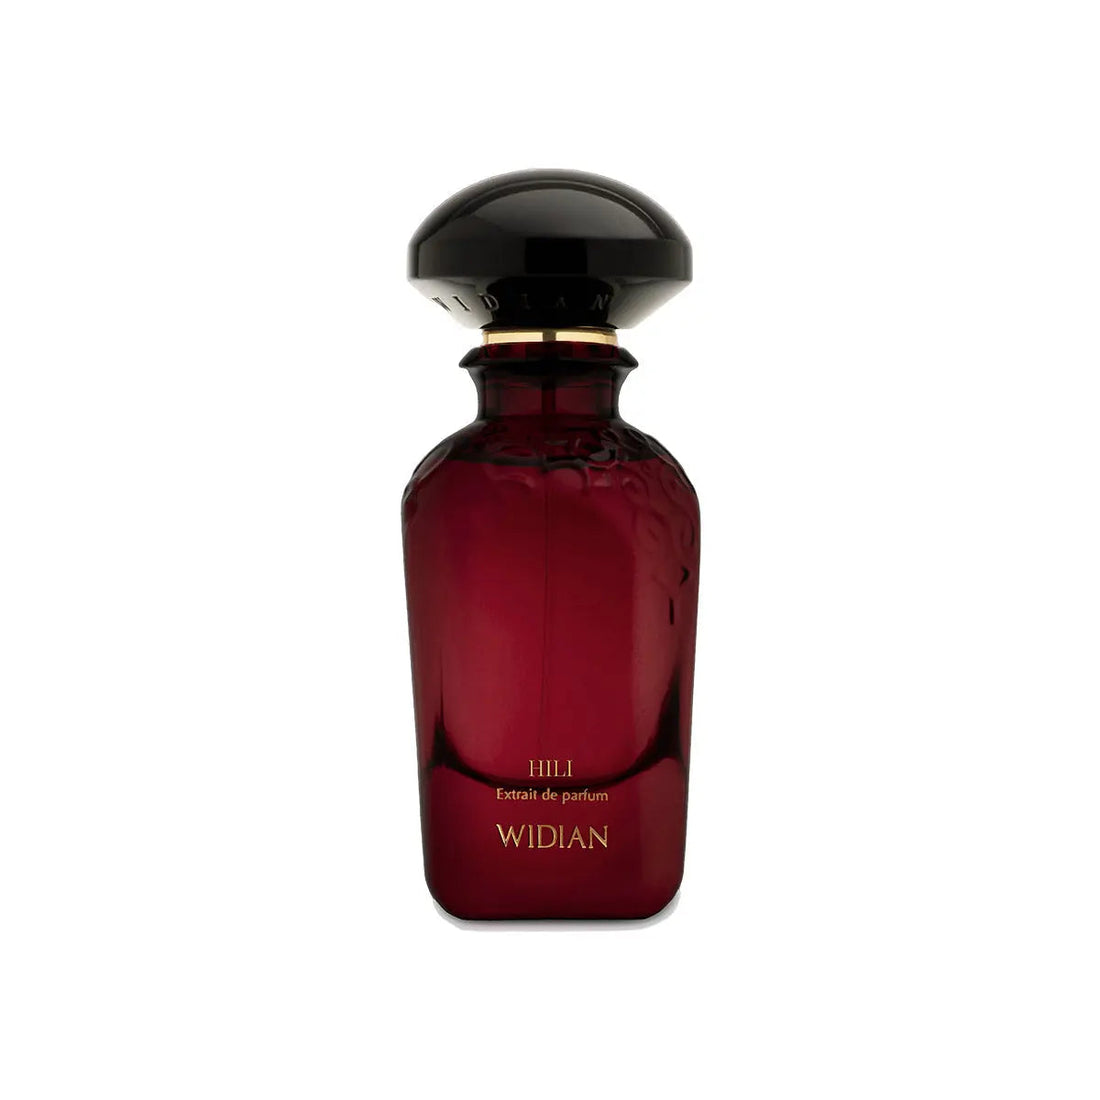 HILI Widian perfume extract - 50 ml